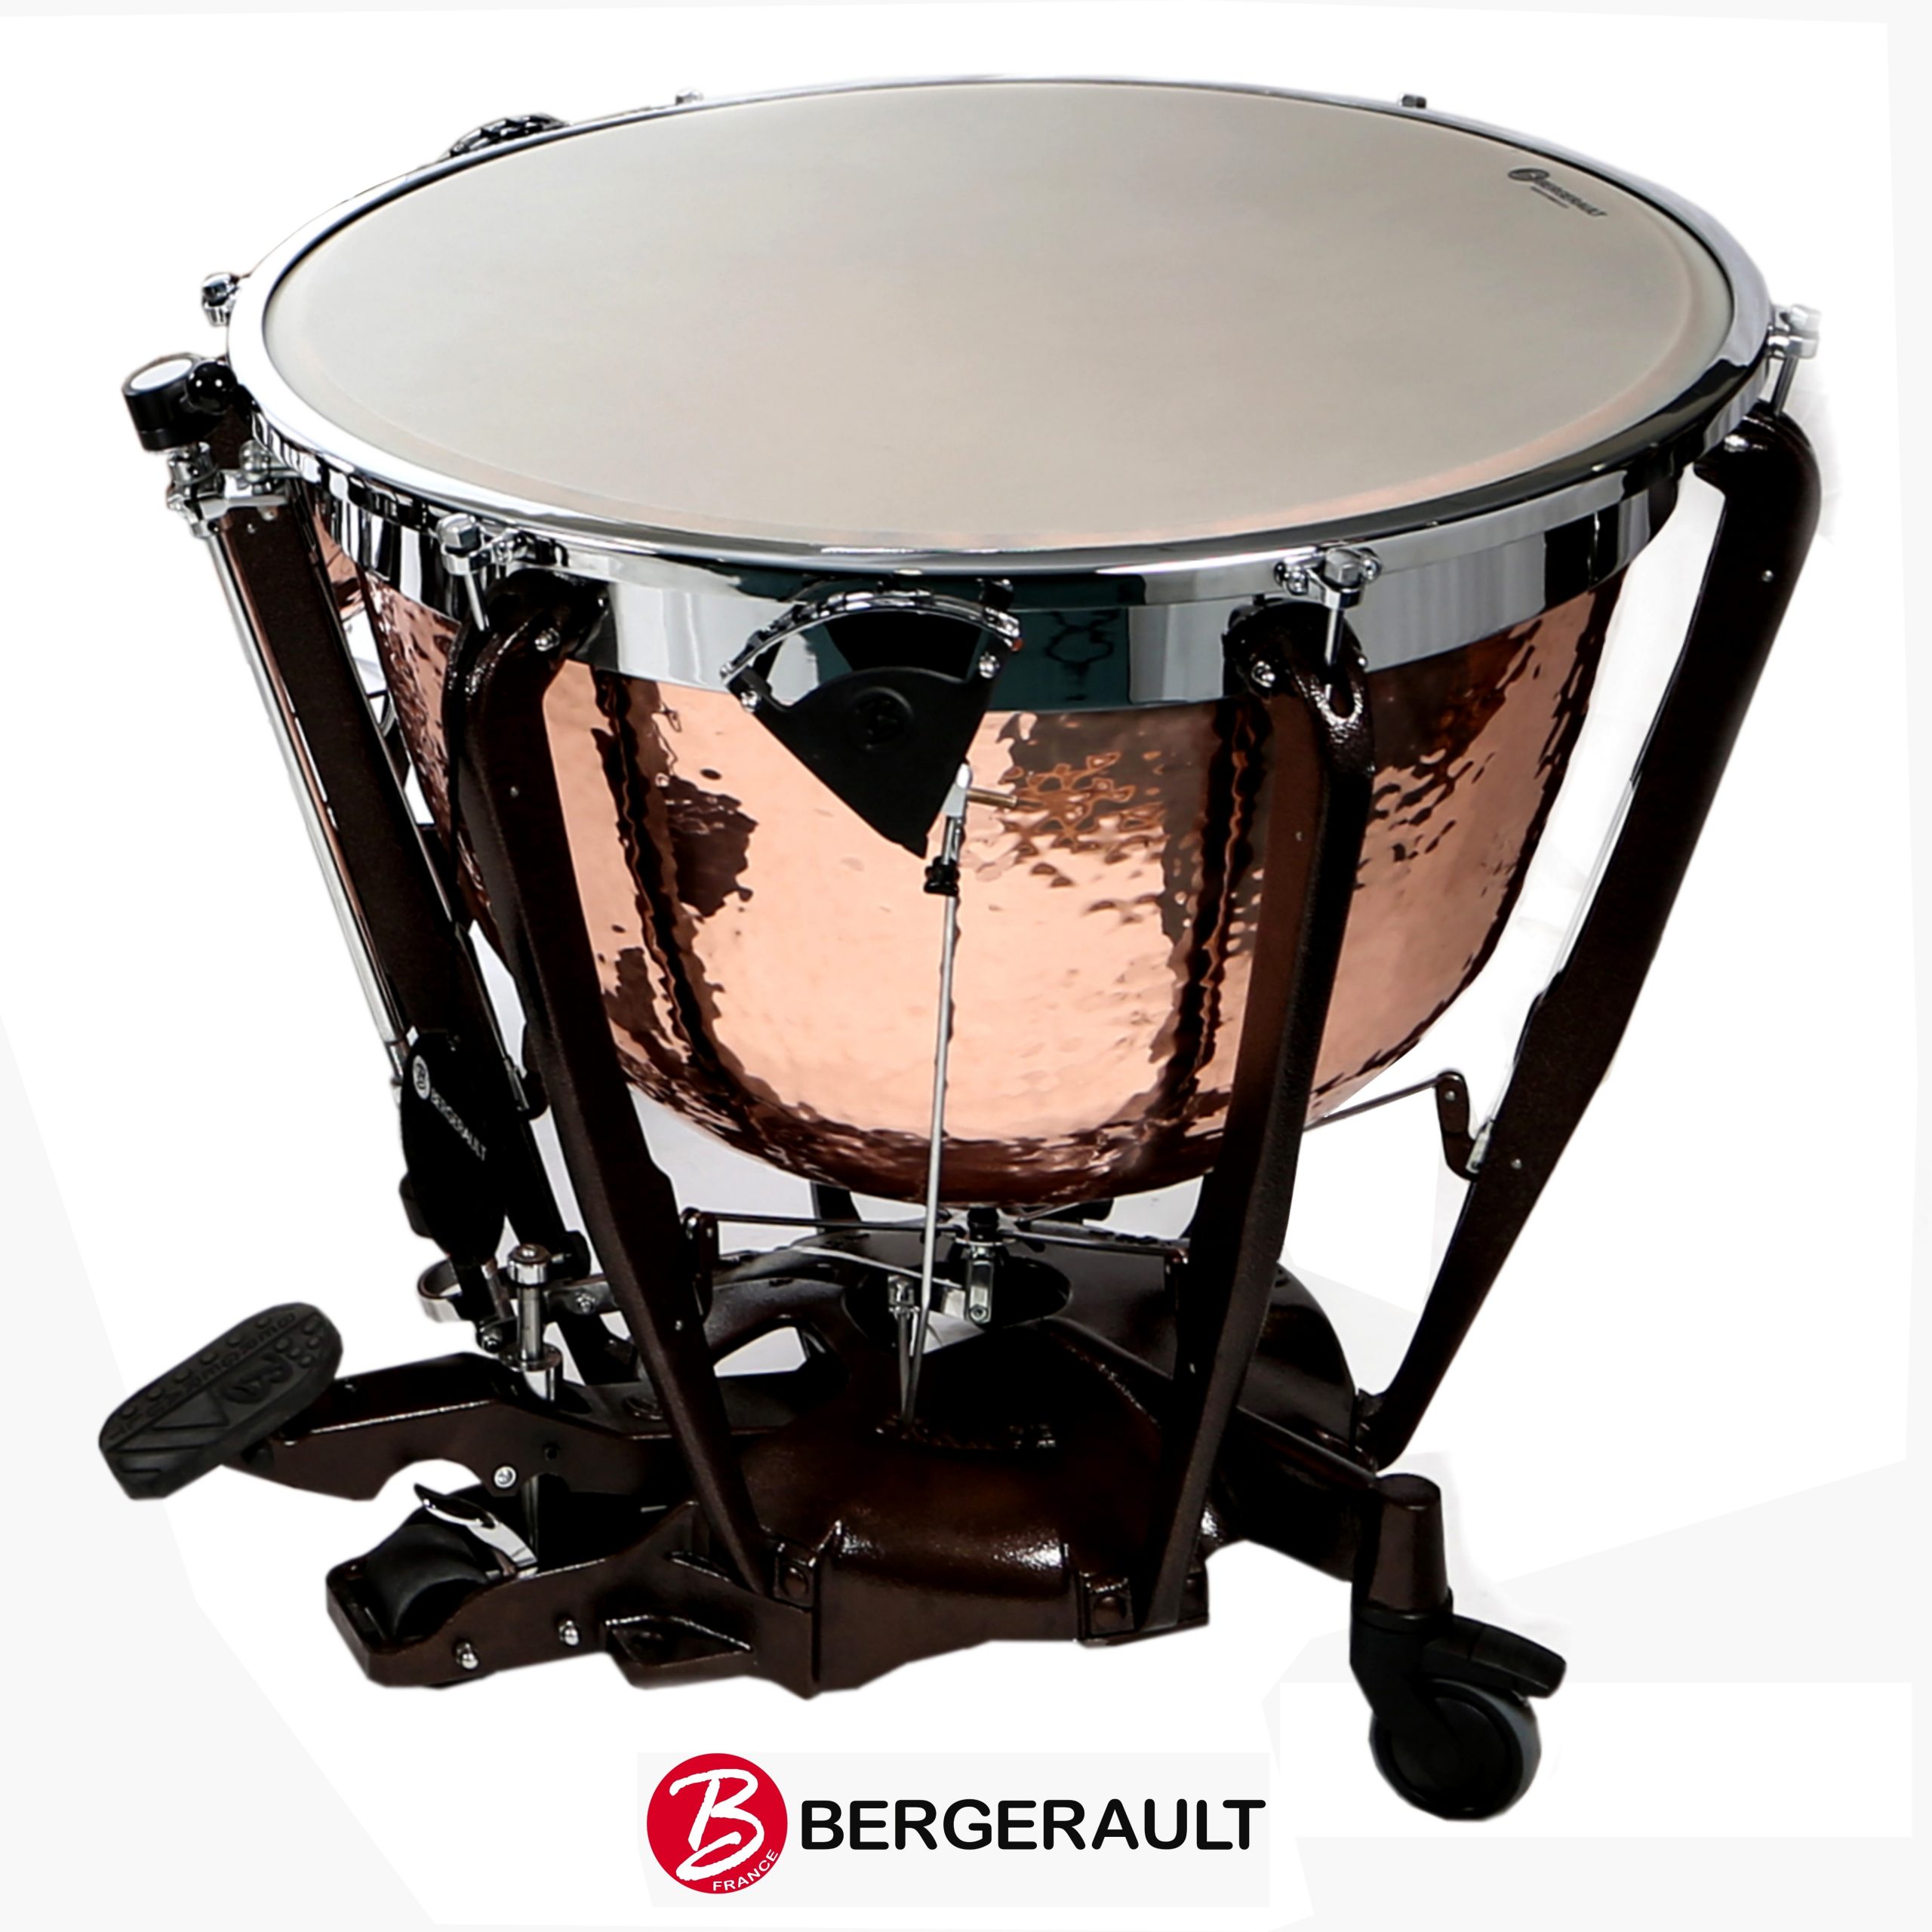 Bergerault Timpani Grand Symphonic Ø 32" cambered copper hand hammered